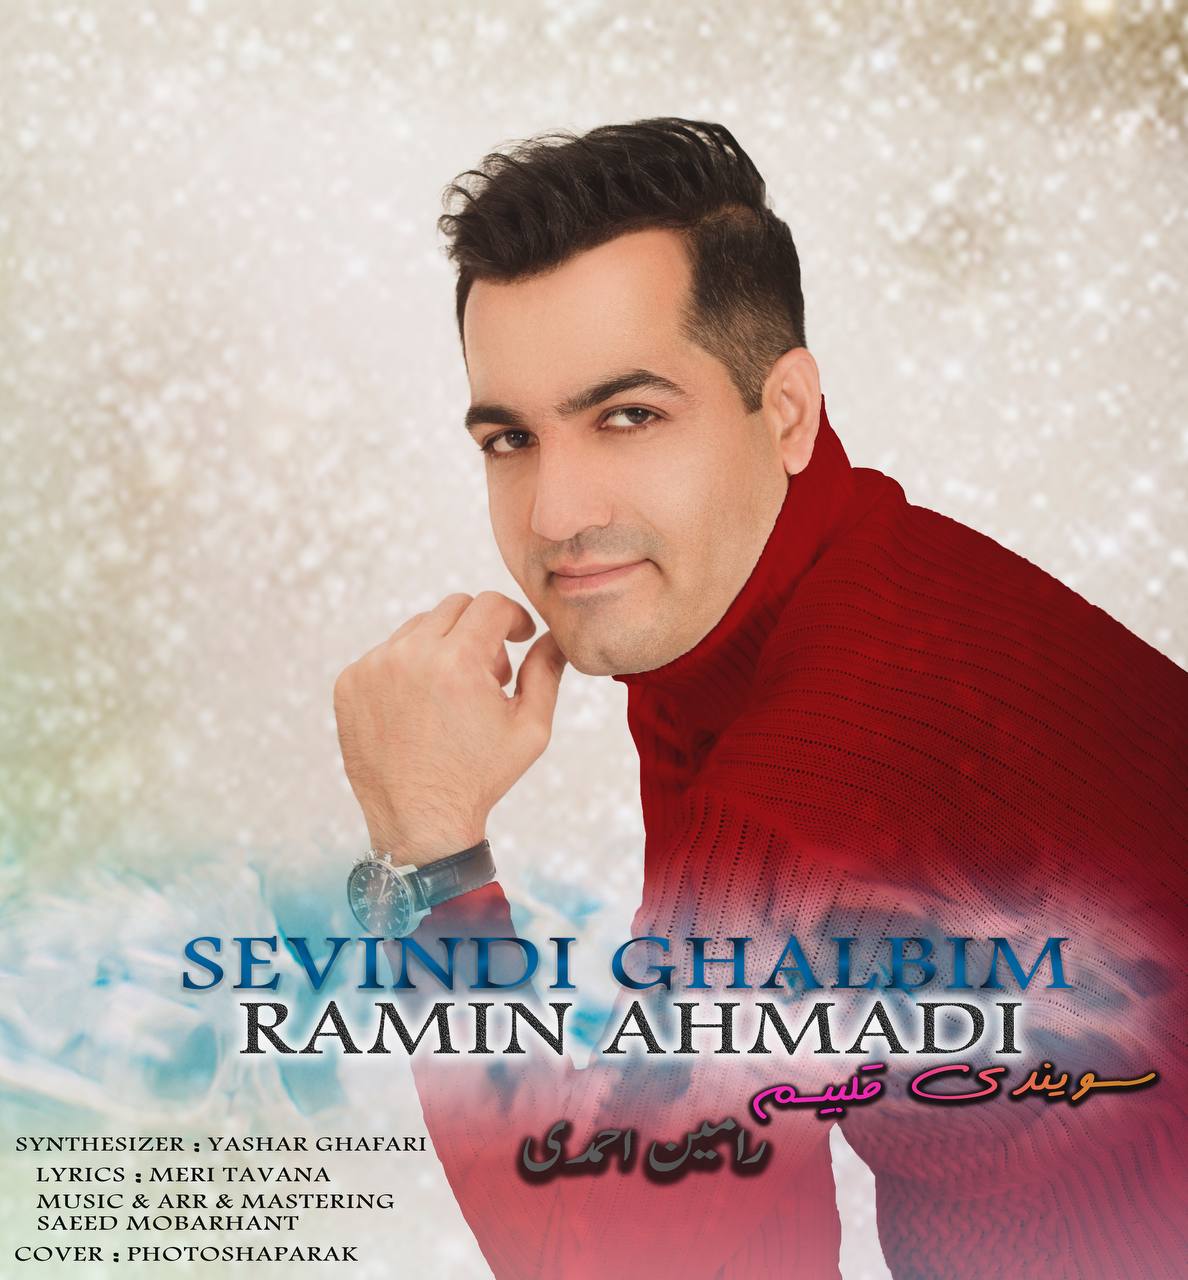 Ramin Ahmadi – Sevind Ghalbim